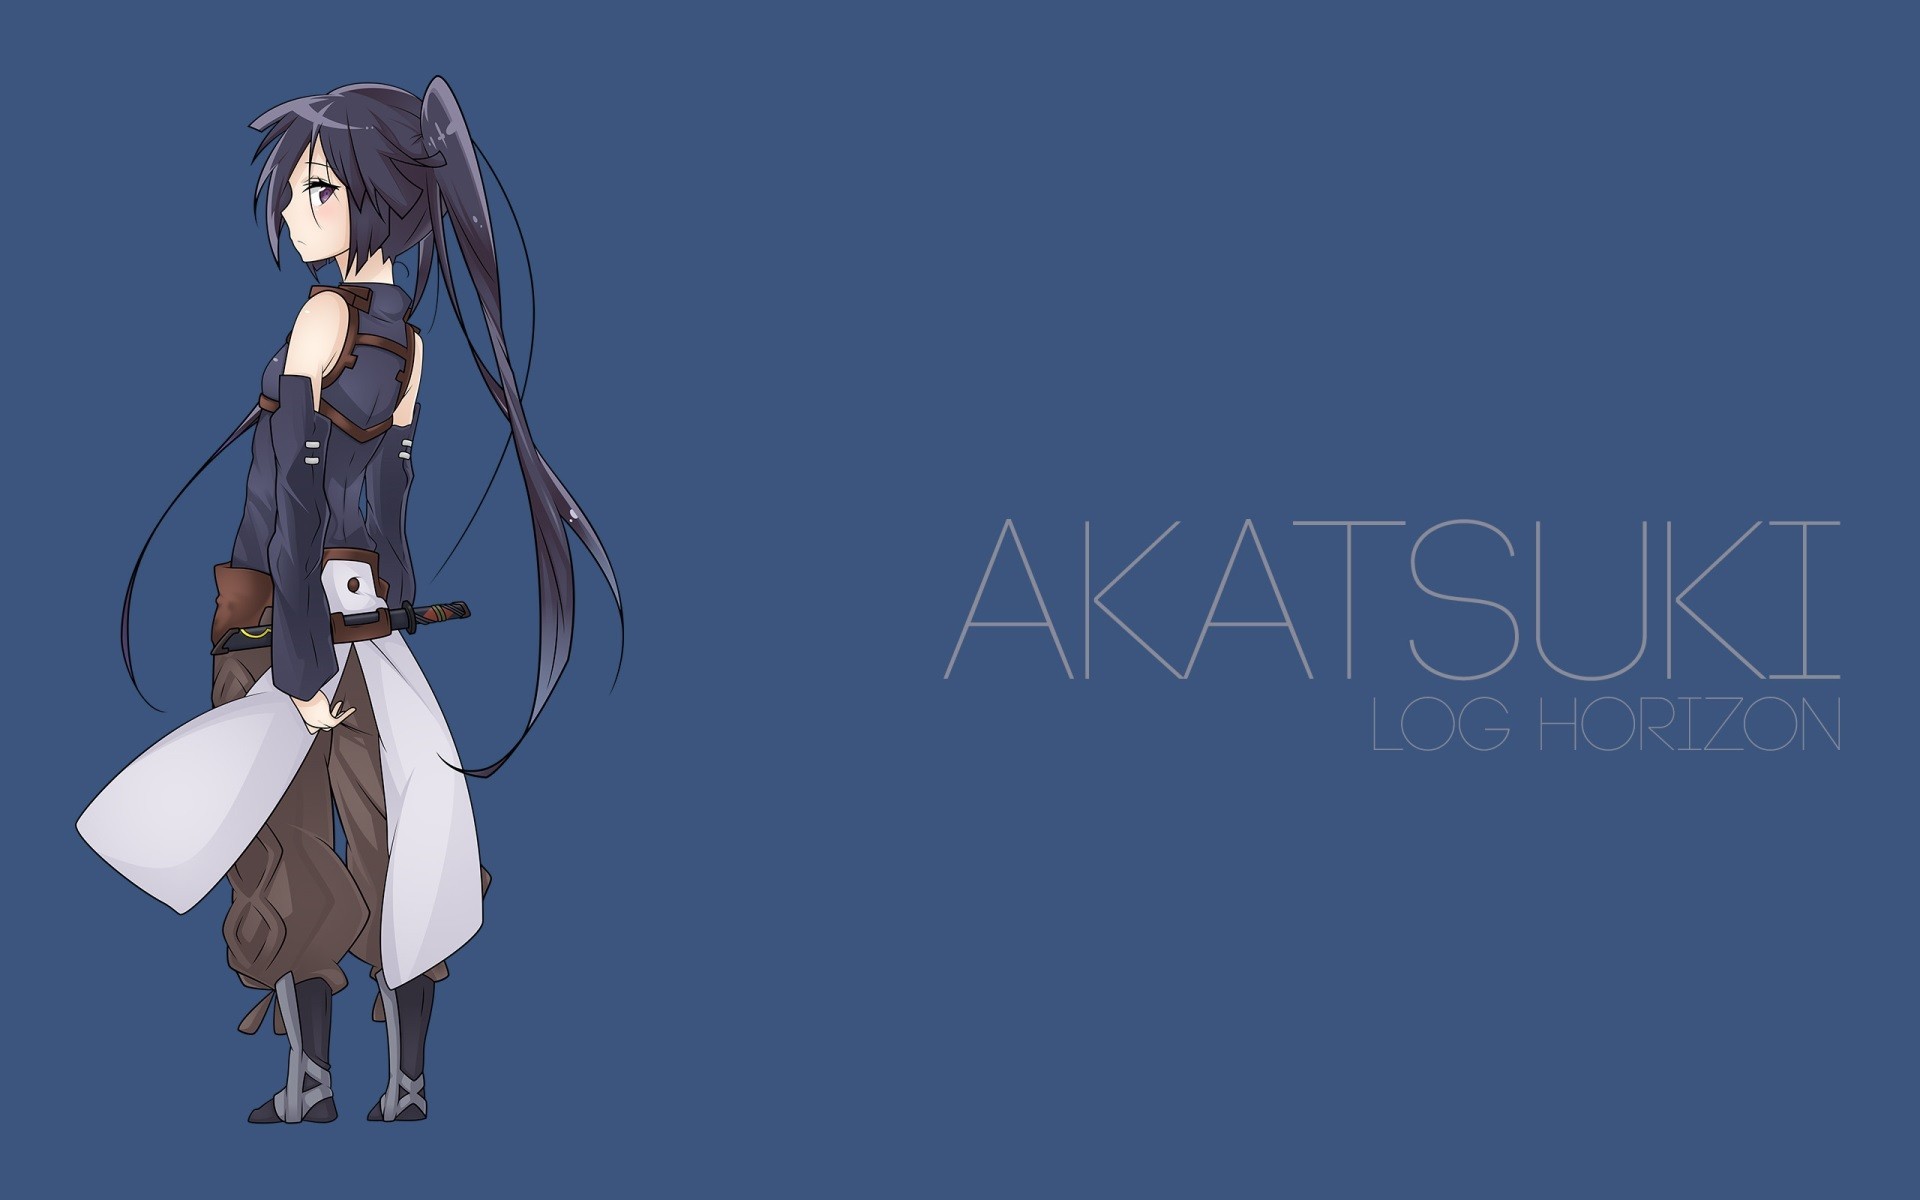 Akatsuki anime Log horizon, blue background